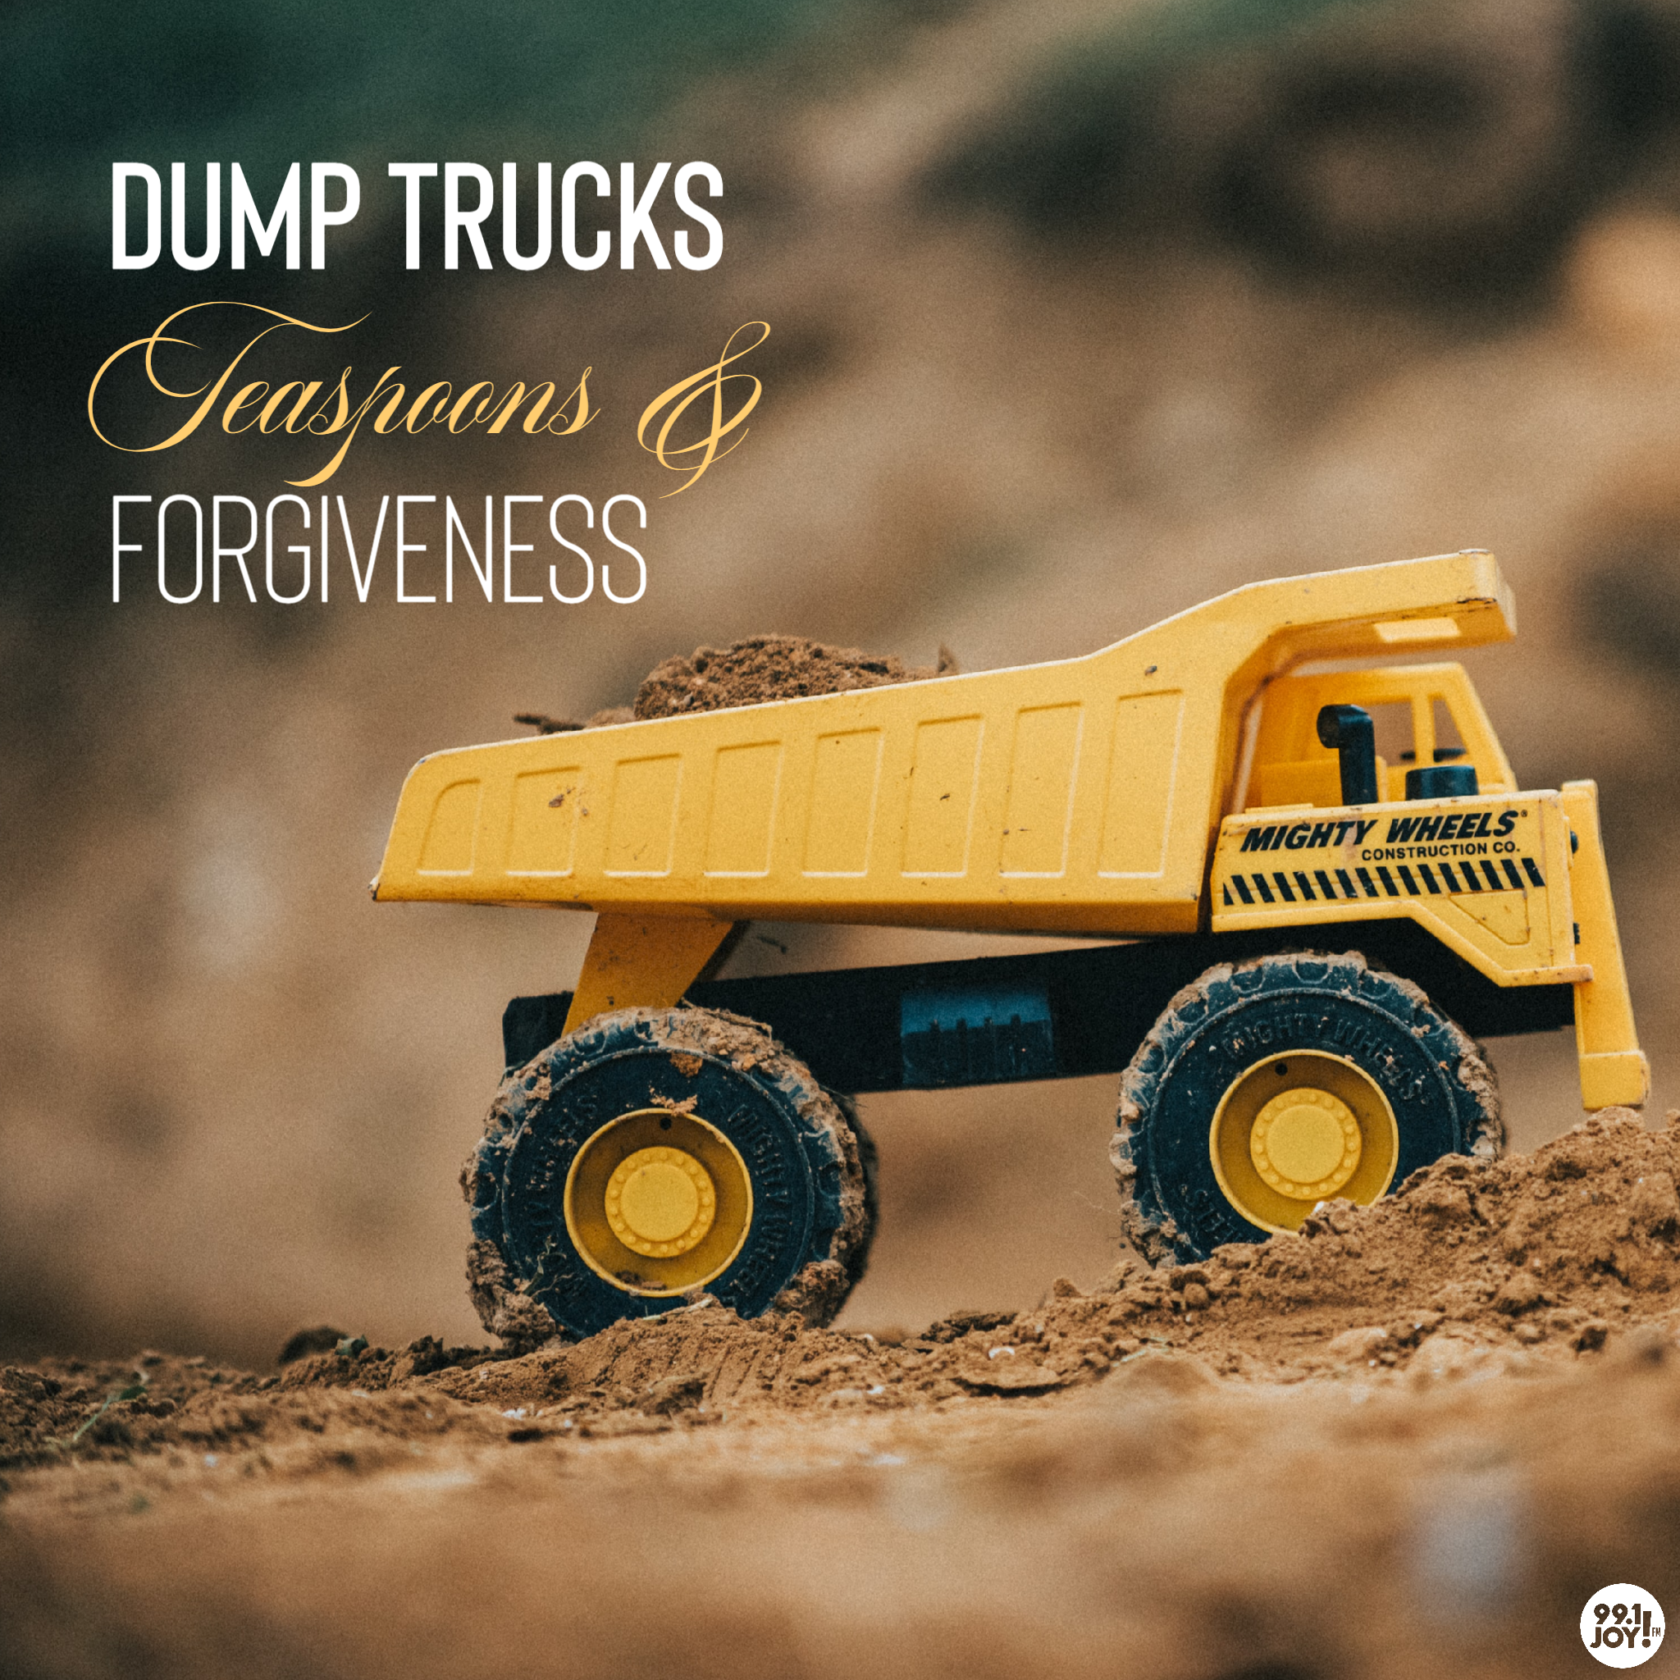 Dump Trucks, Teaspoons & Forgiveness